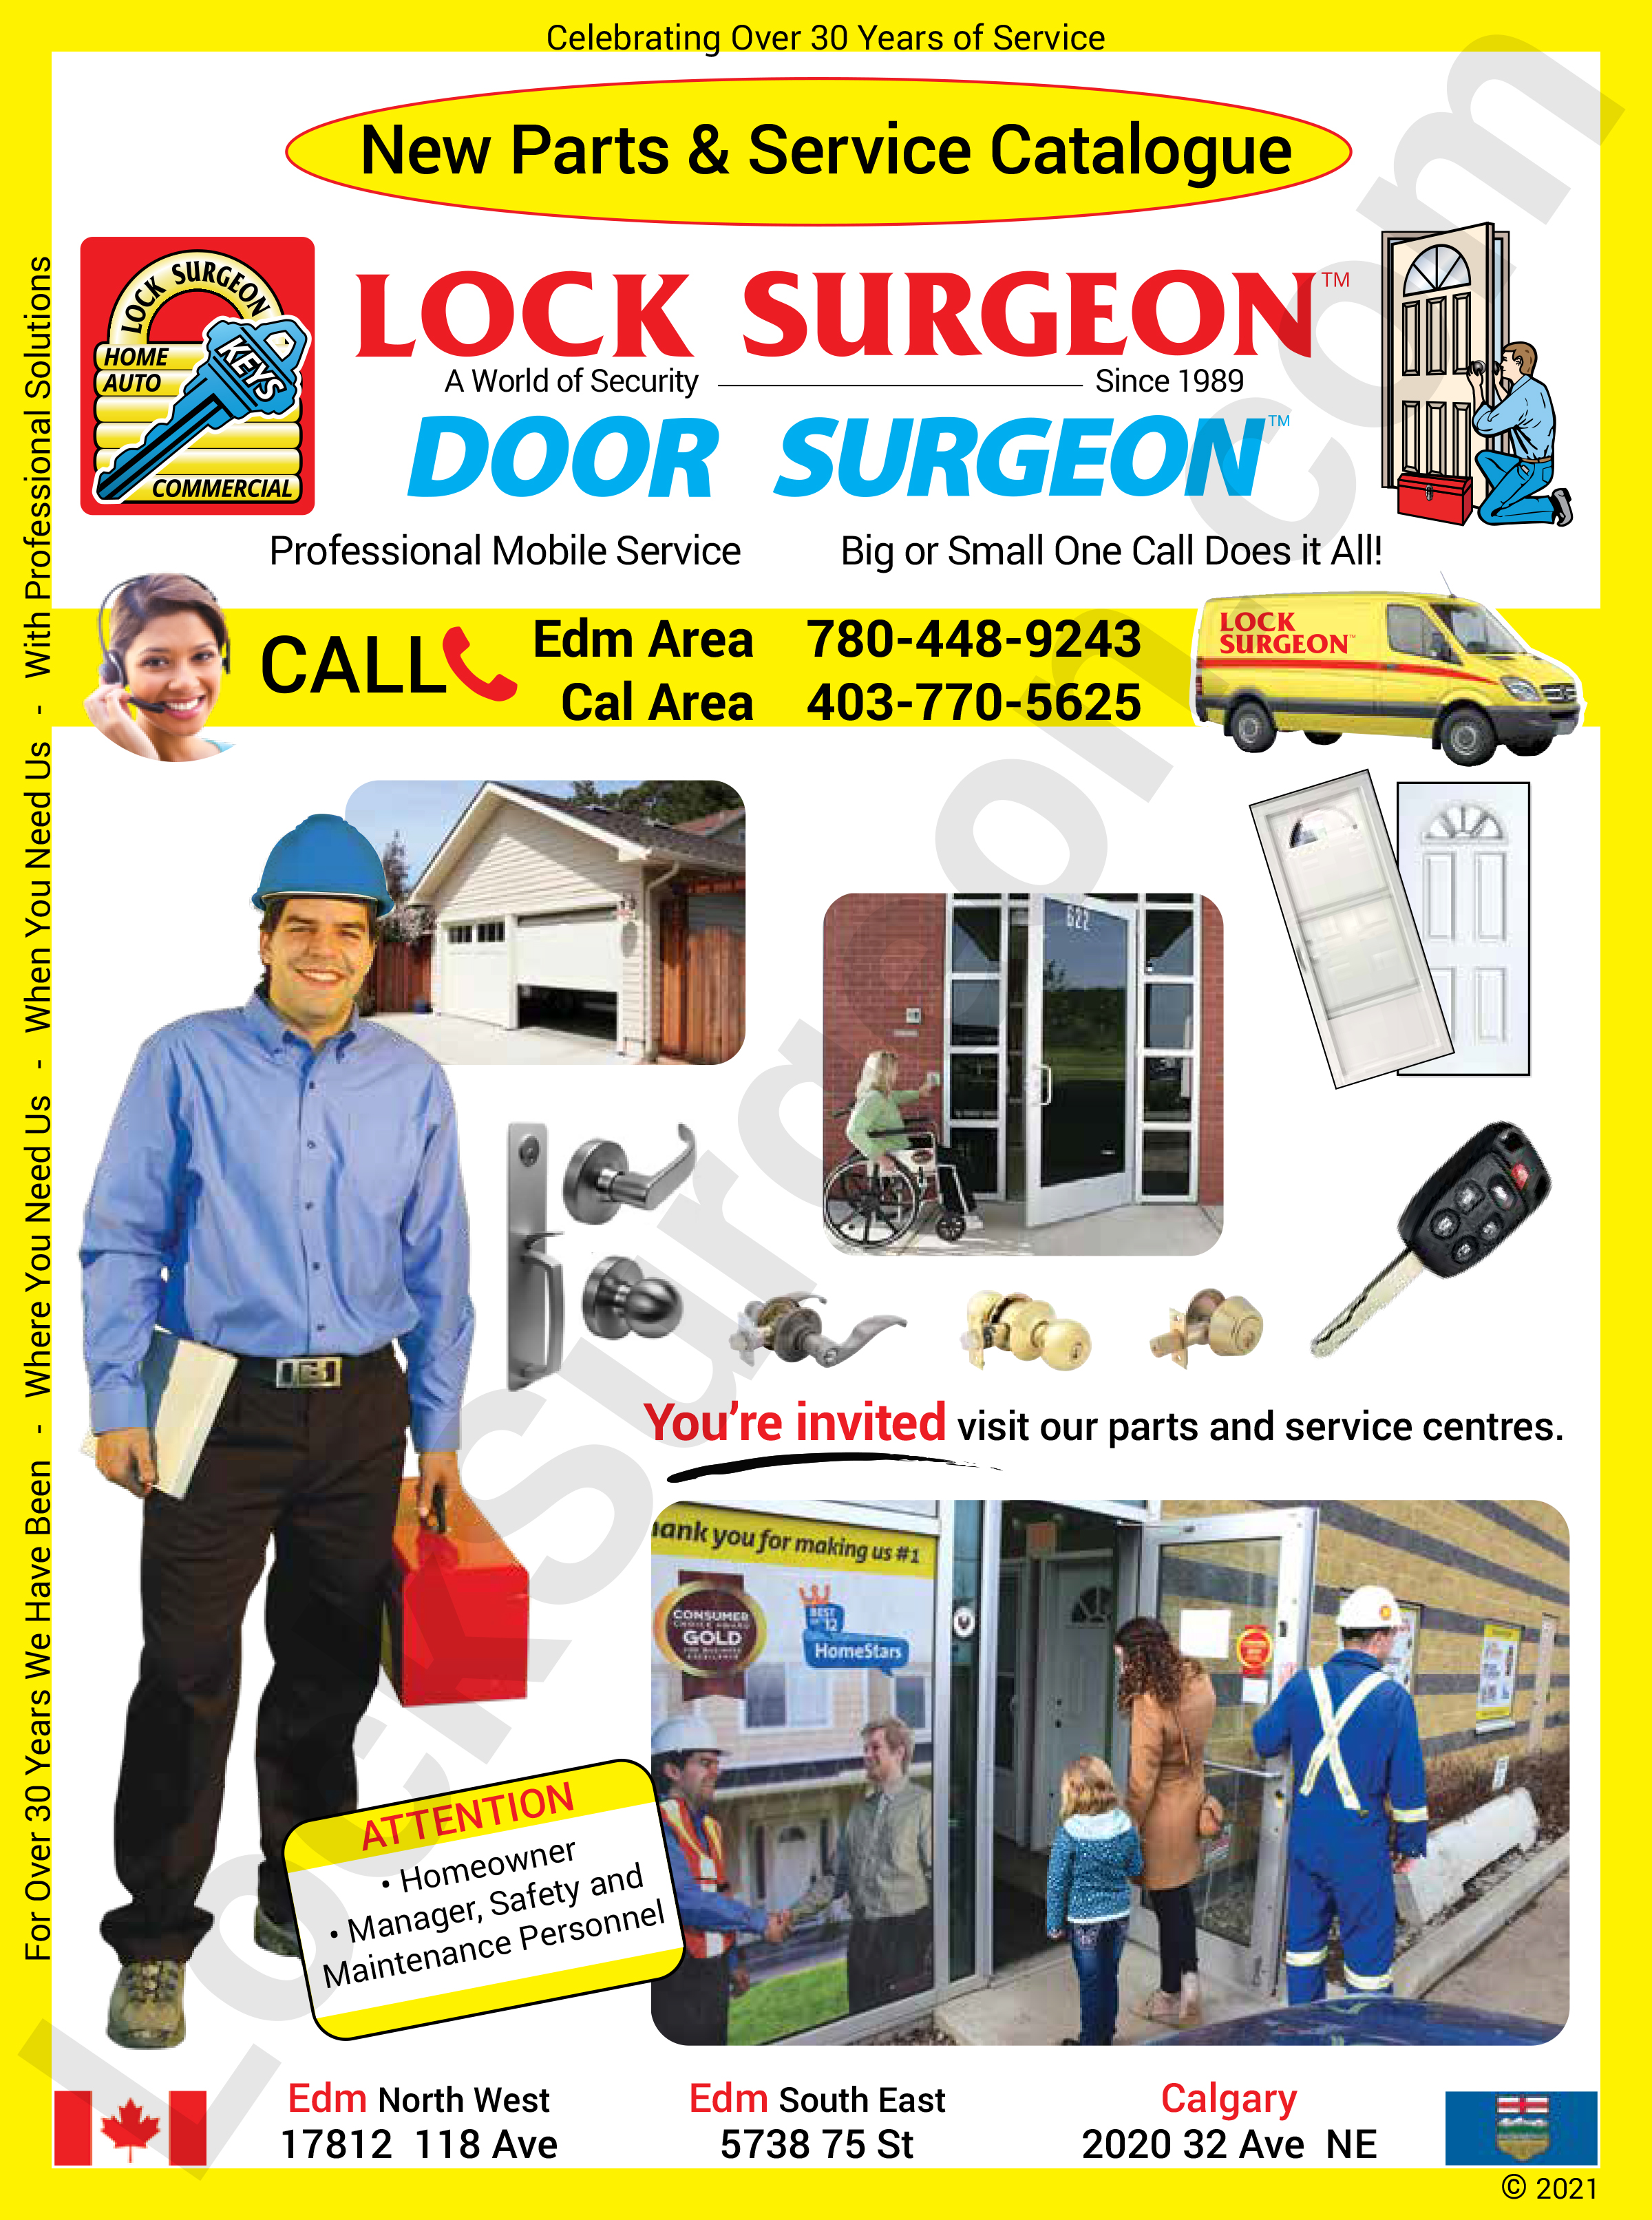 Home lock & door repair, Business Locks & Security Hardware, Commercial Key Systems, Security Keys.